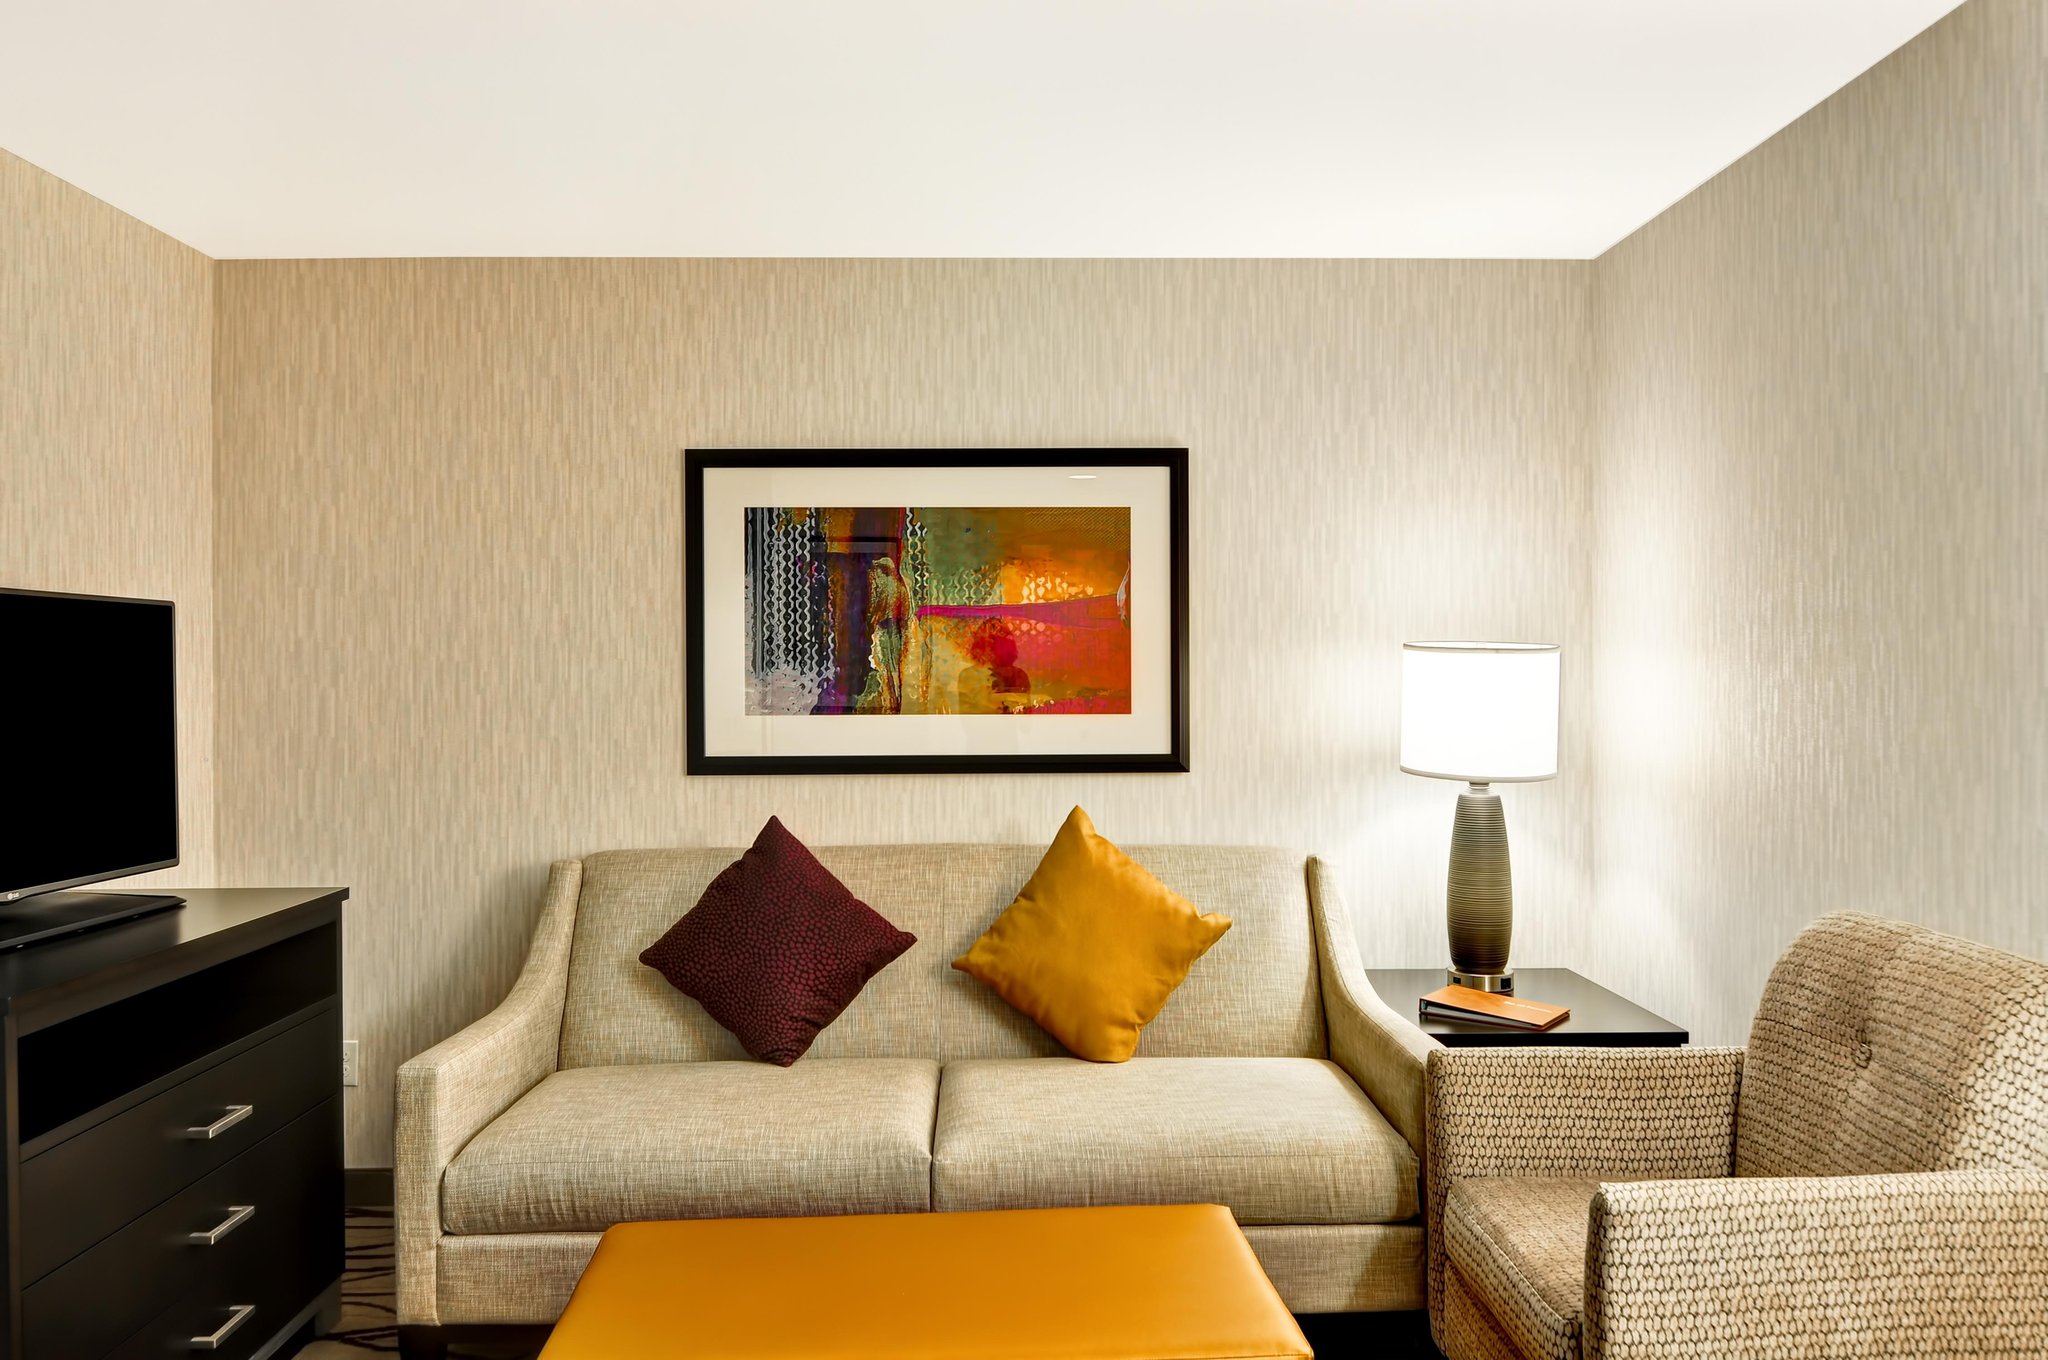 Homewood Suites by Hilton Boston Cambridge Arlington